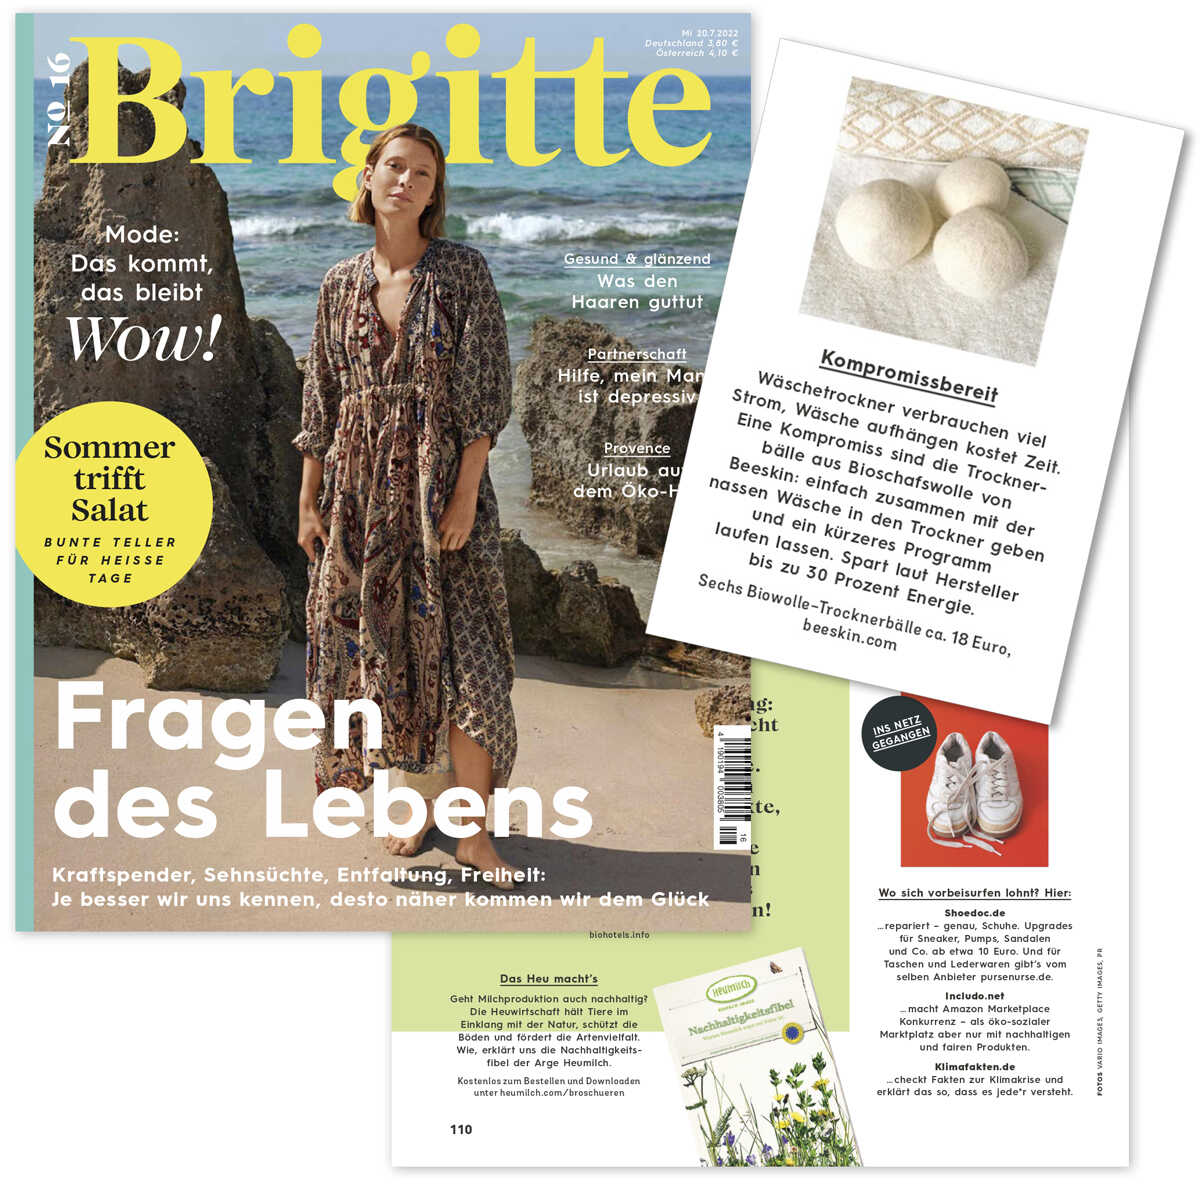 Brigitte cover, dryer balls to save energy